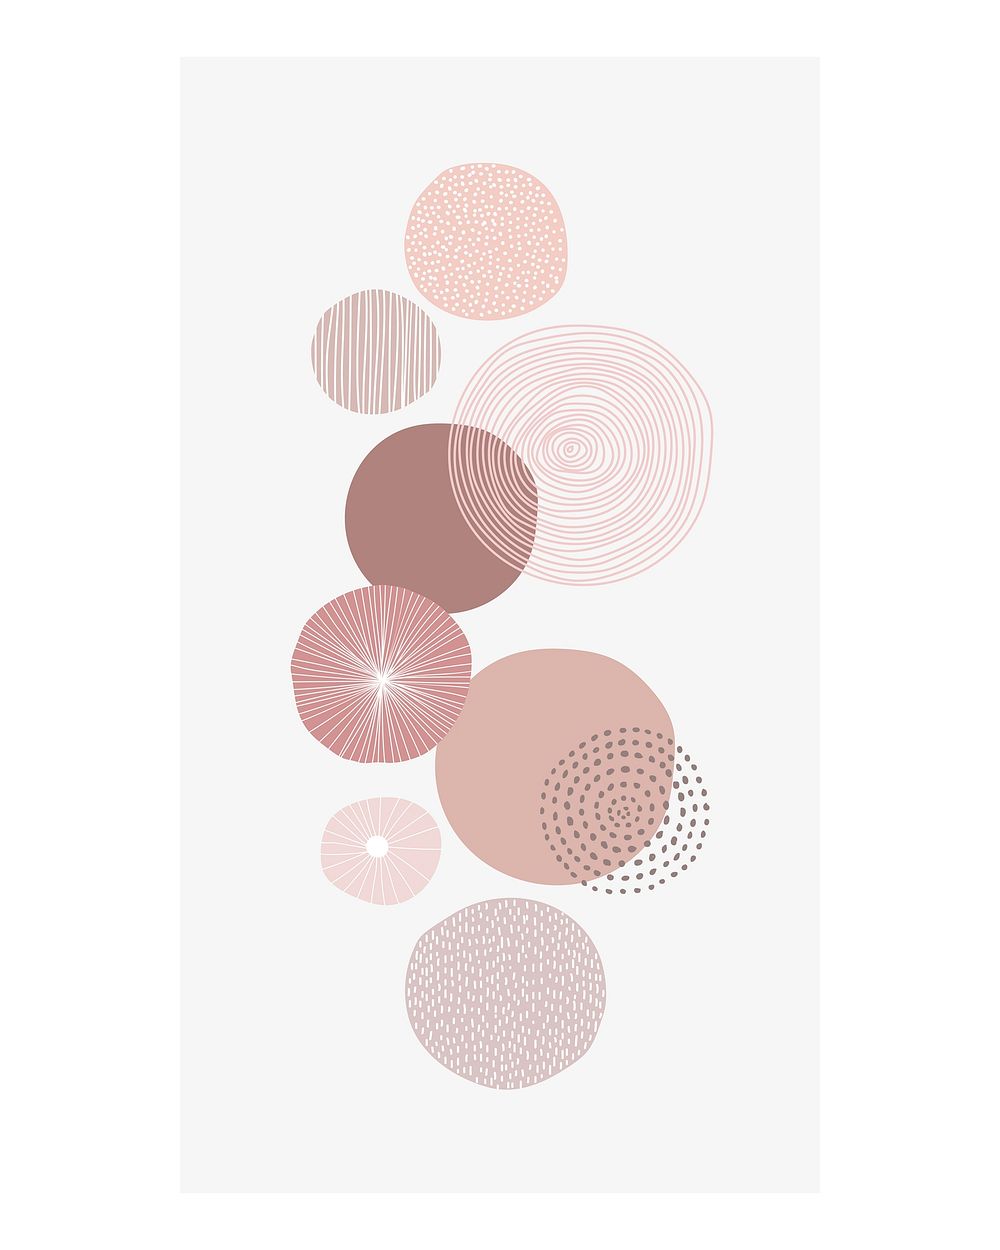 Pastel pink round patterned background illustration